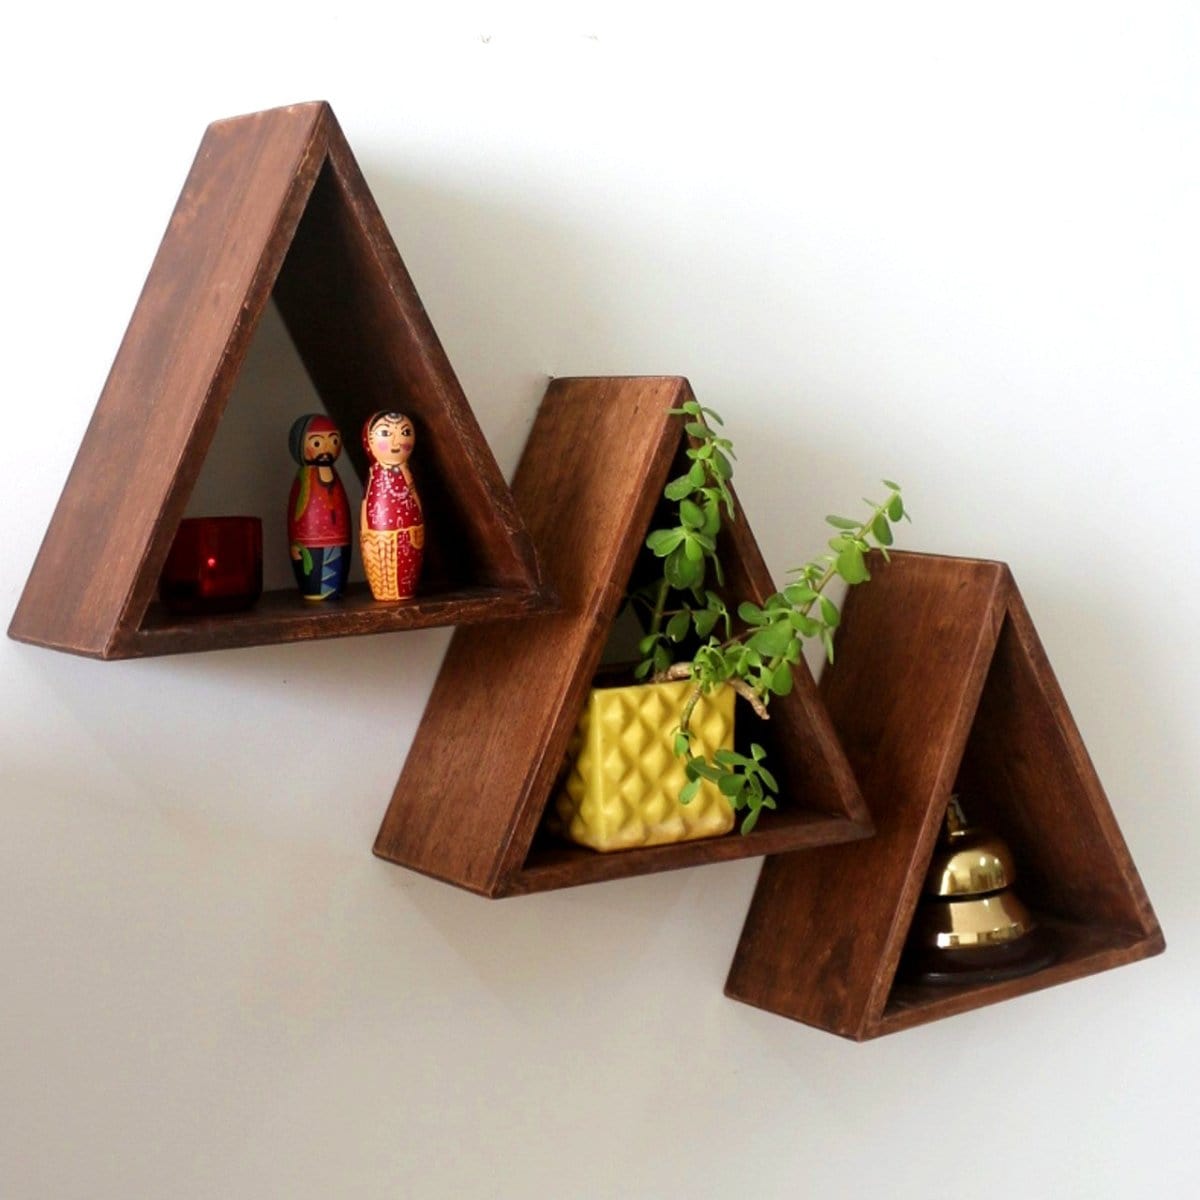 Barish Wall Shelf Triangular (Set of 3) Walnut BH0010WT Best Home Decor Handcrafted